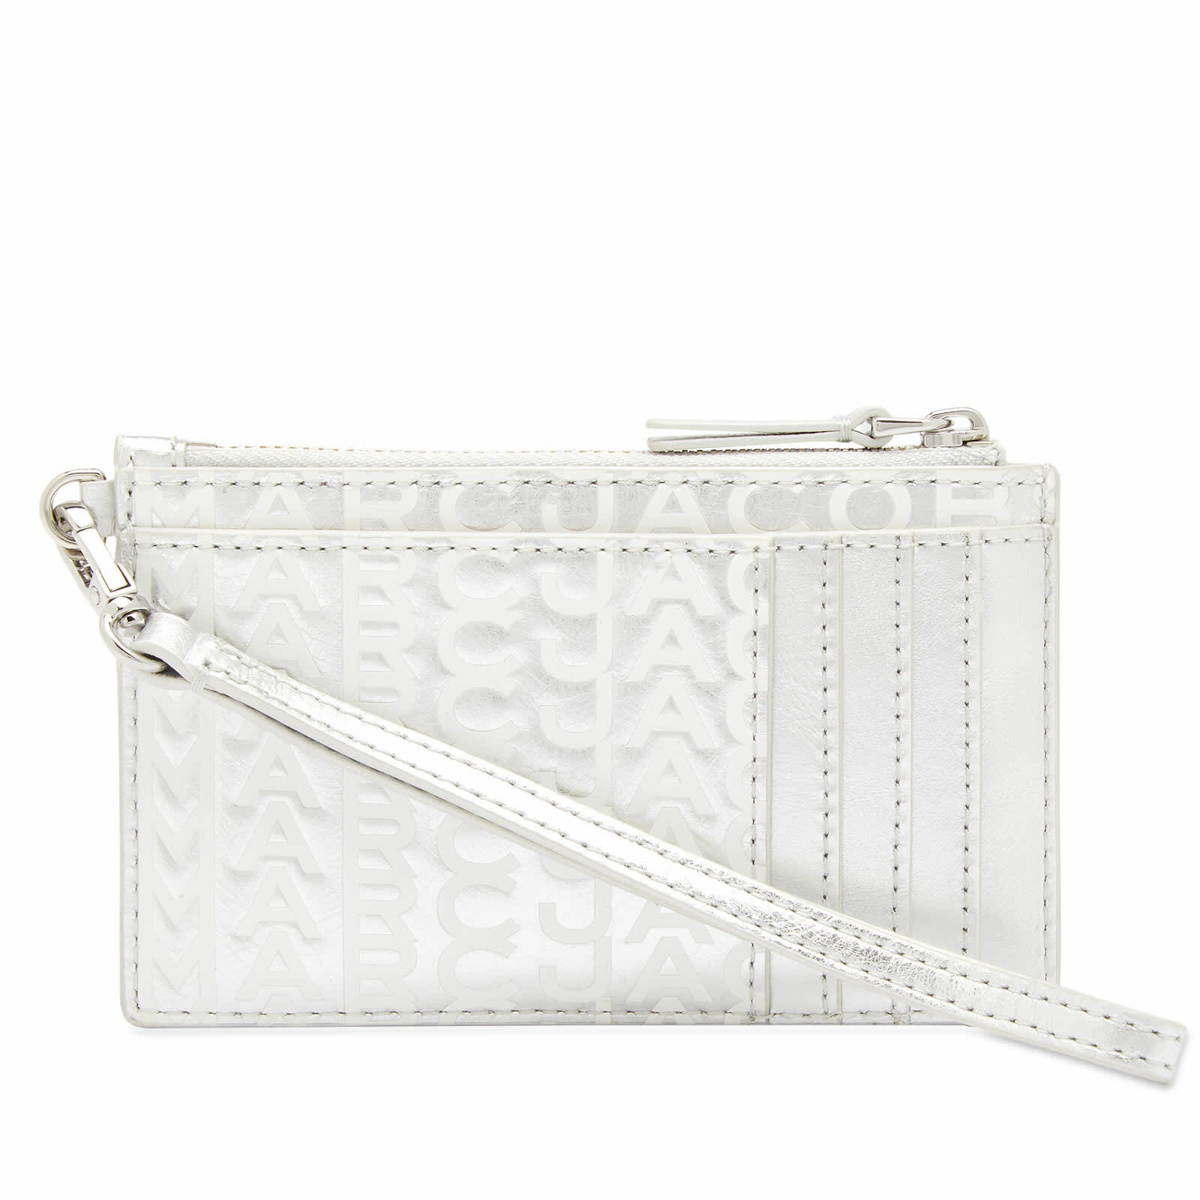 Marc Jacobs Women's The Top Zip Wristlet Wallet in Silver/Bright